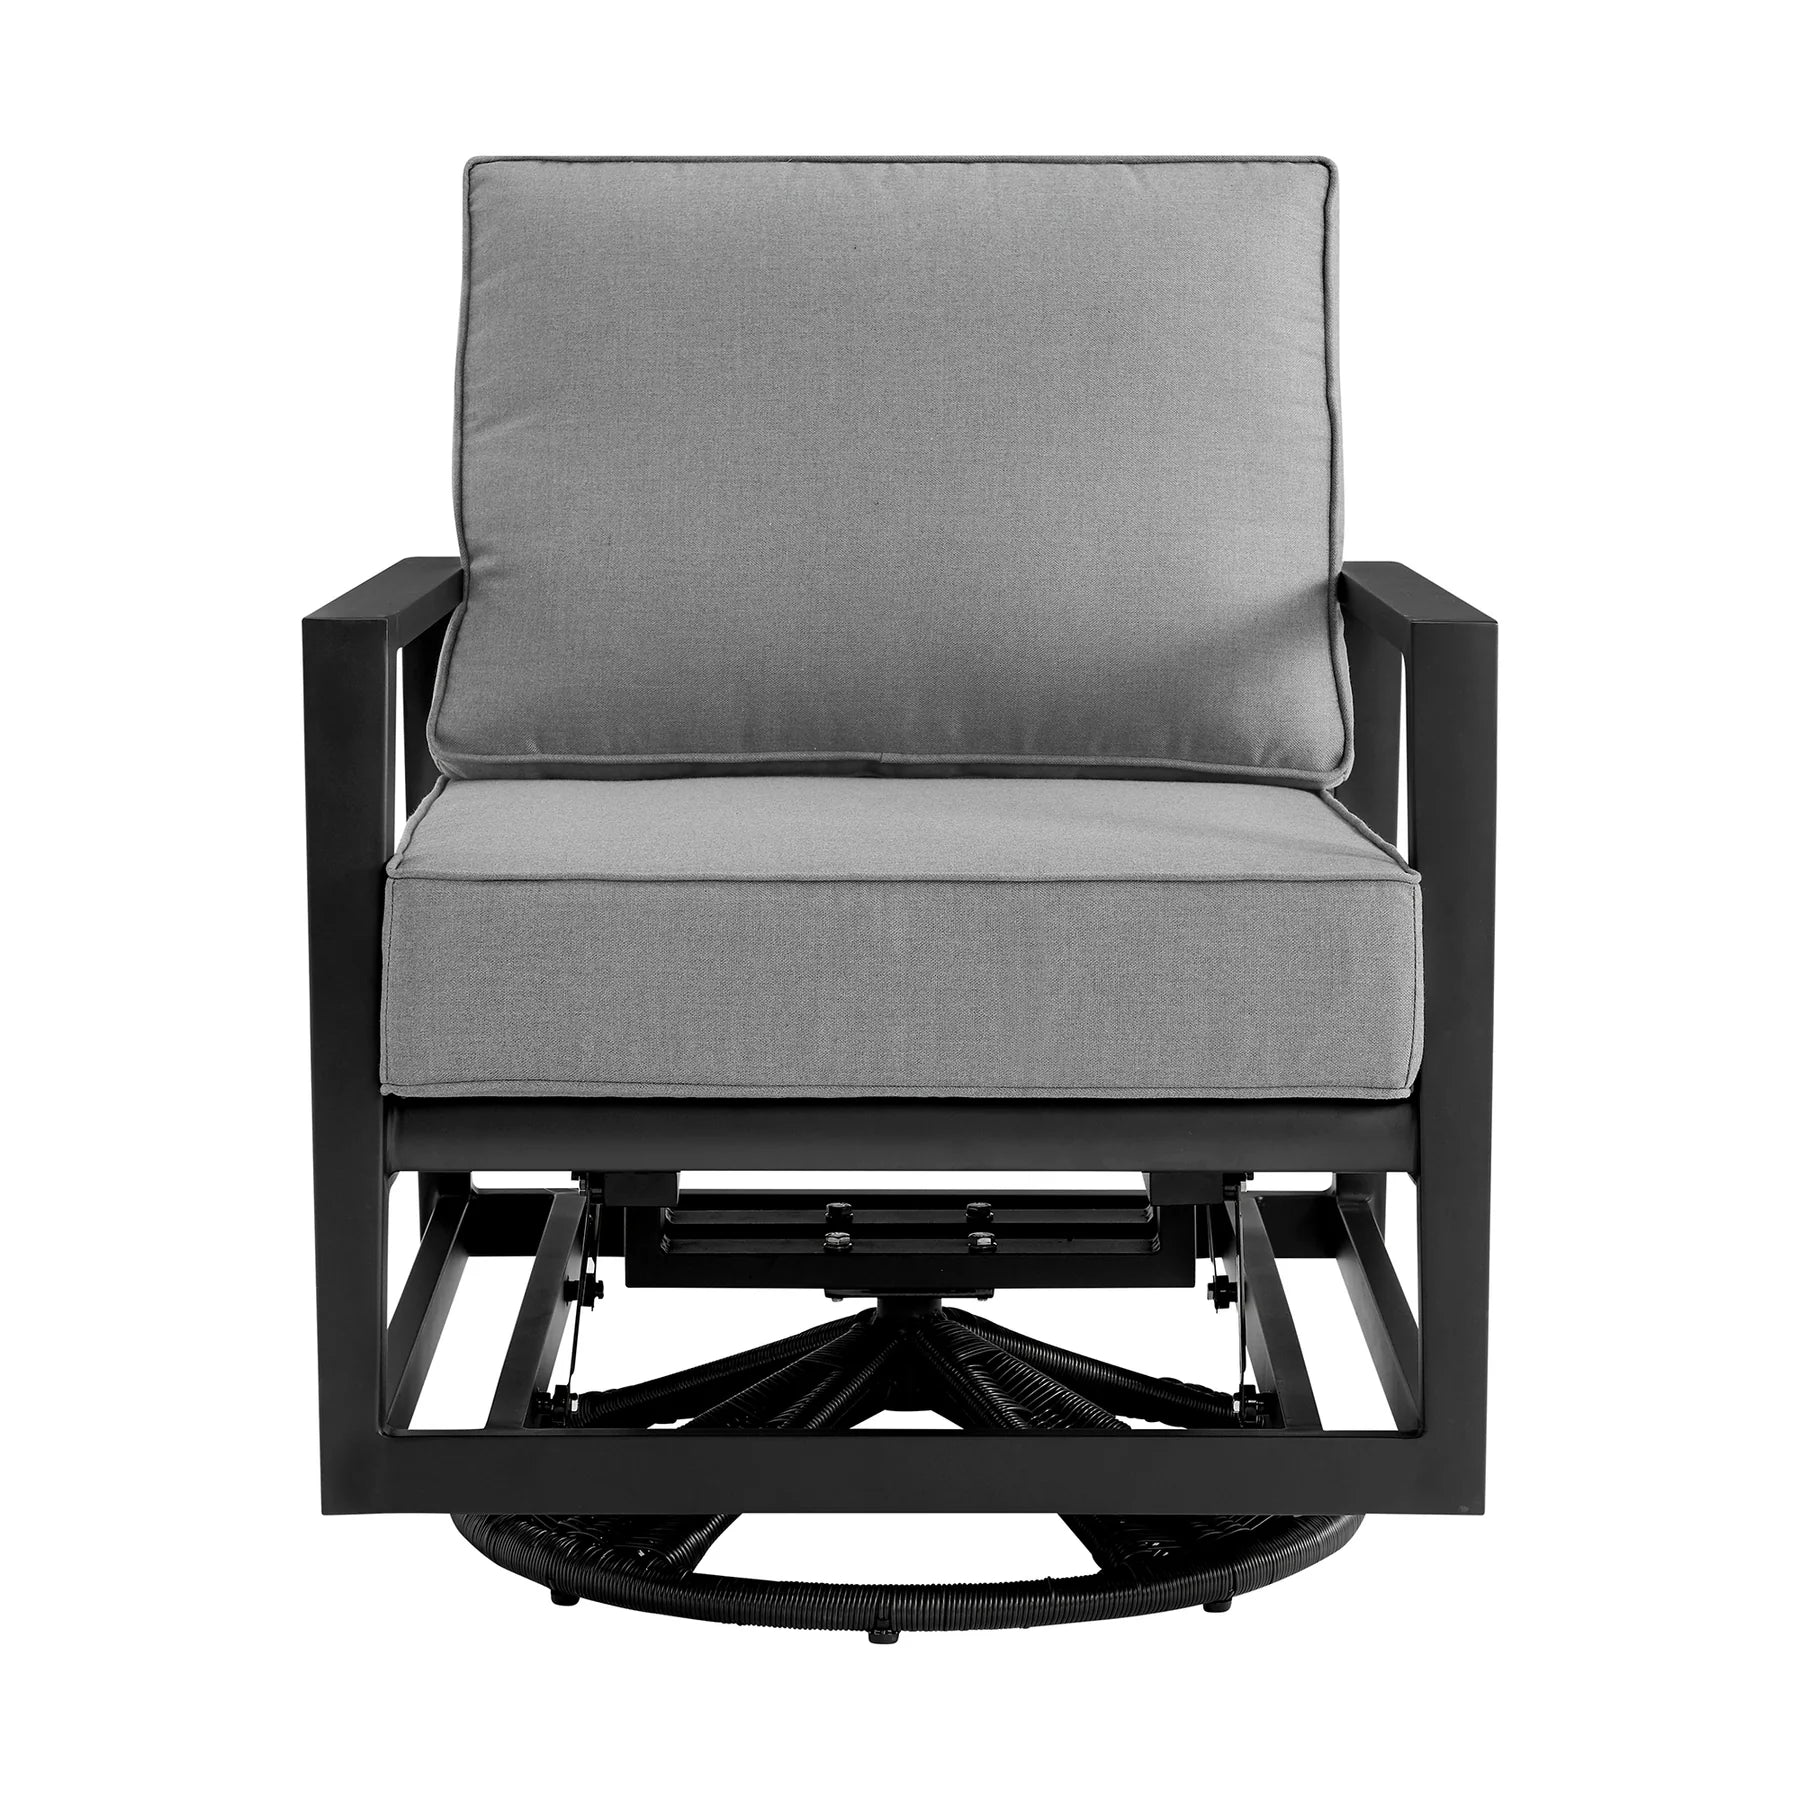 Cayman Outdoor Swivel Chair